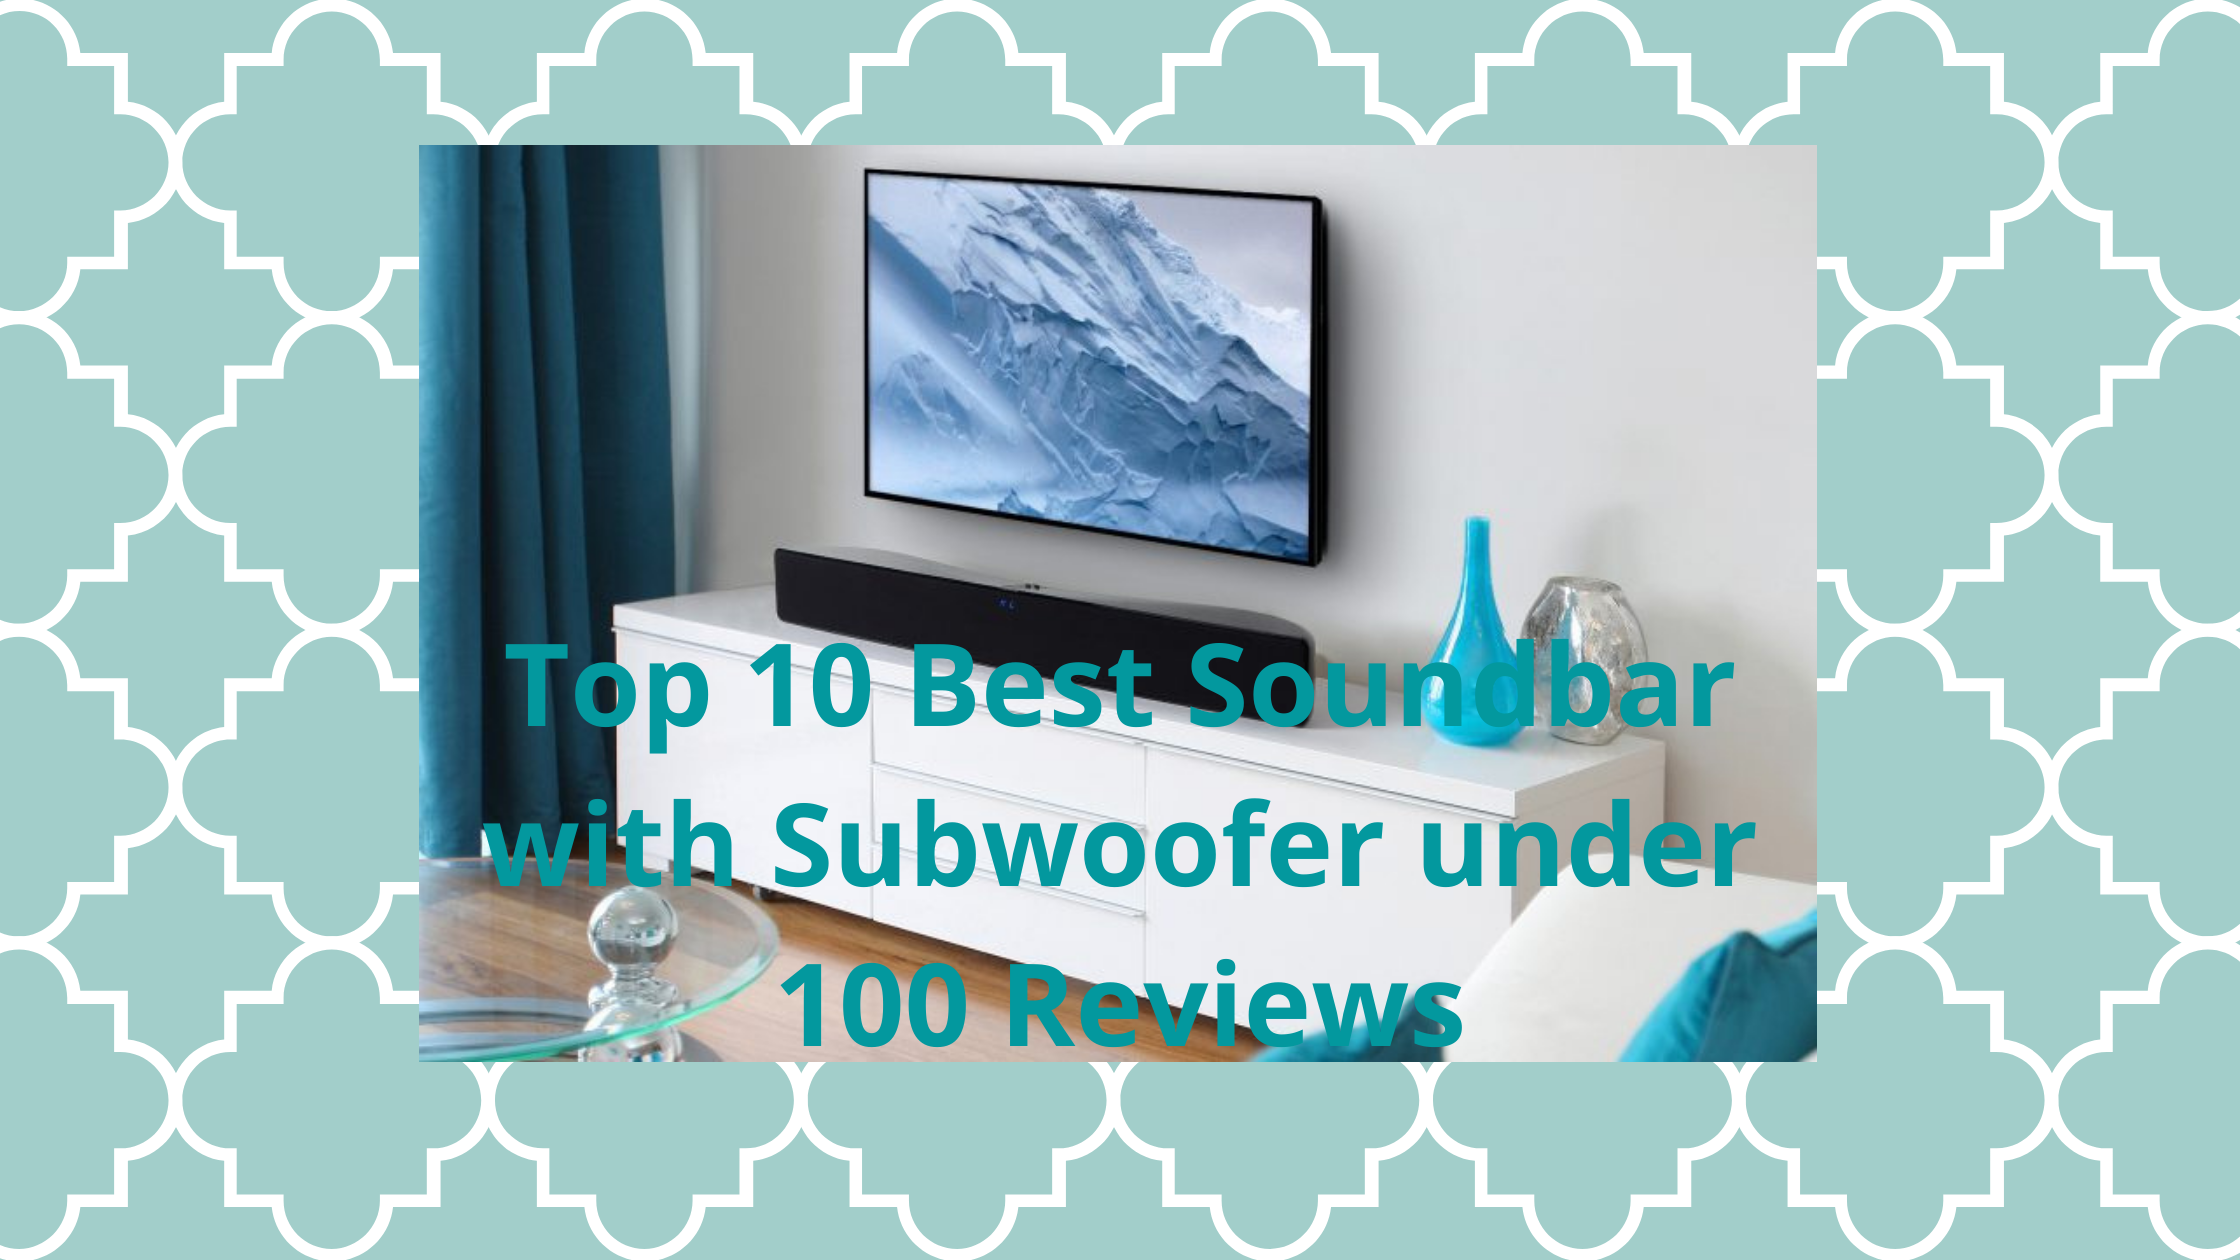 Top 10 Best Soundbar with Subwoofer under 100 Reviews